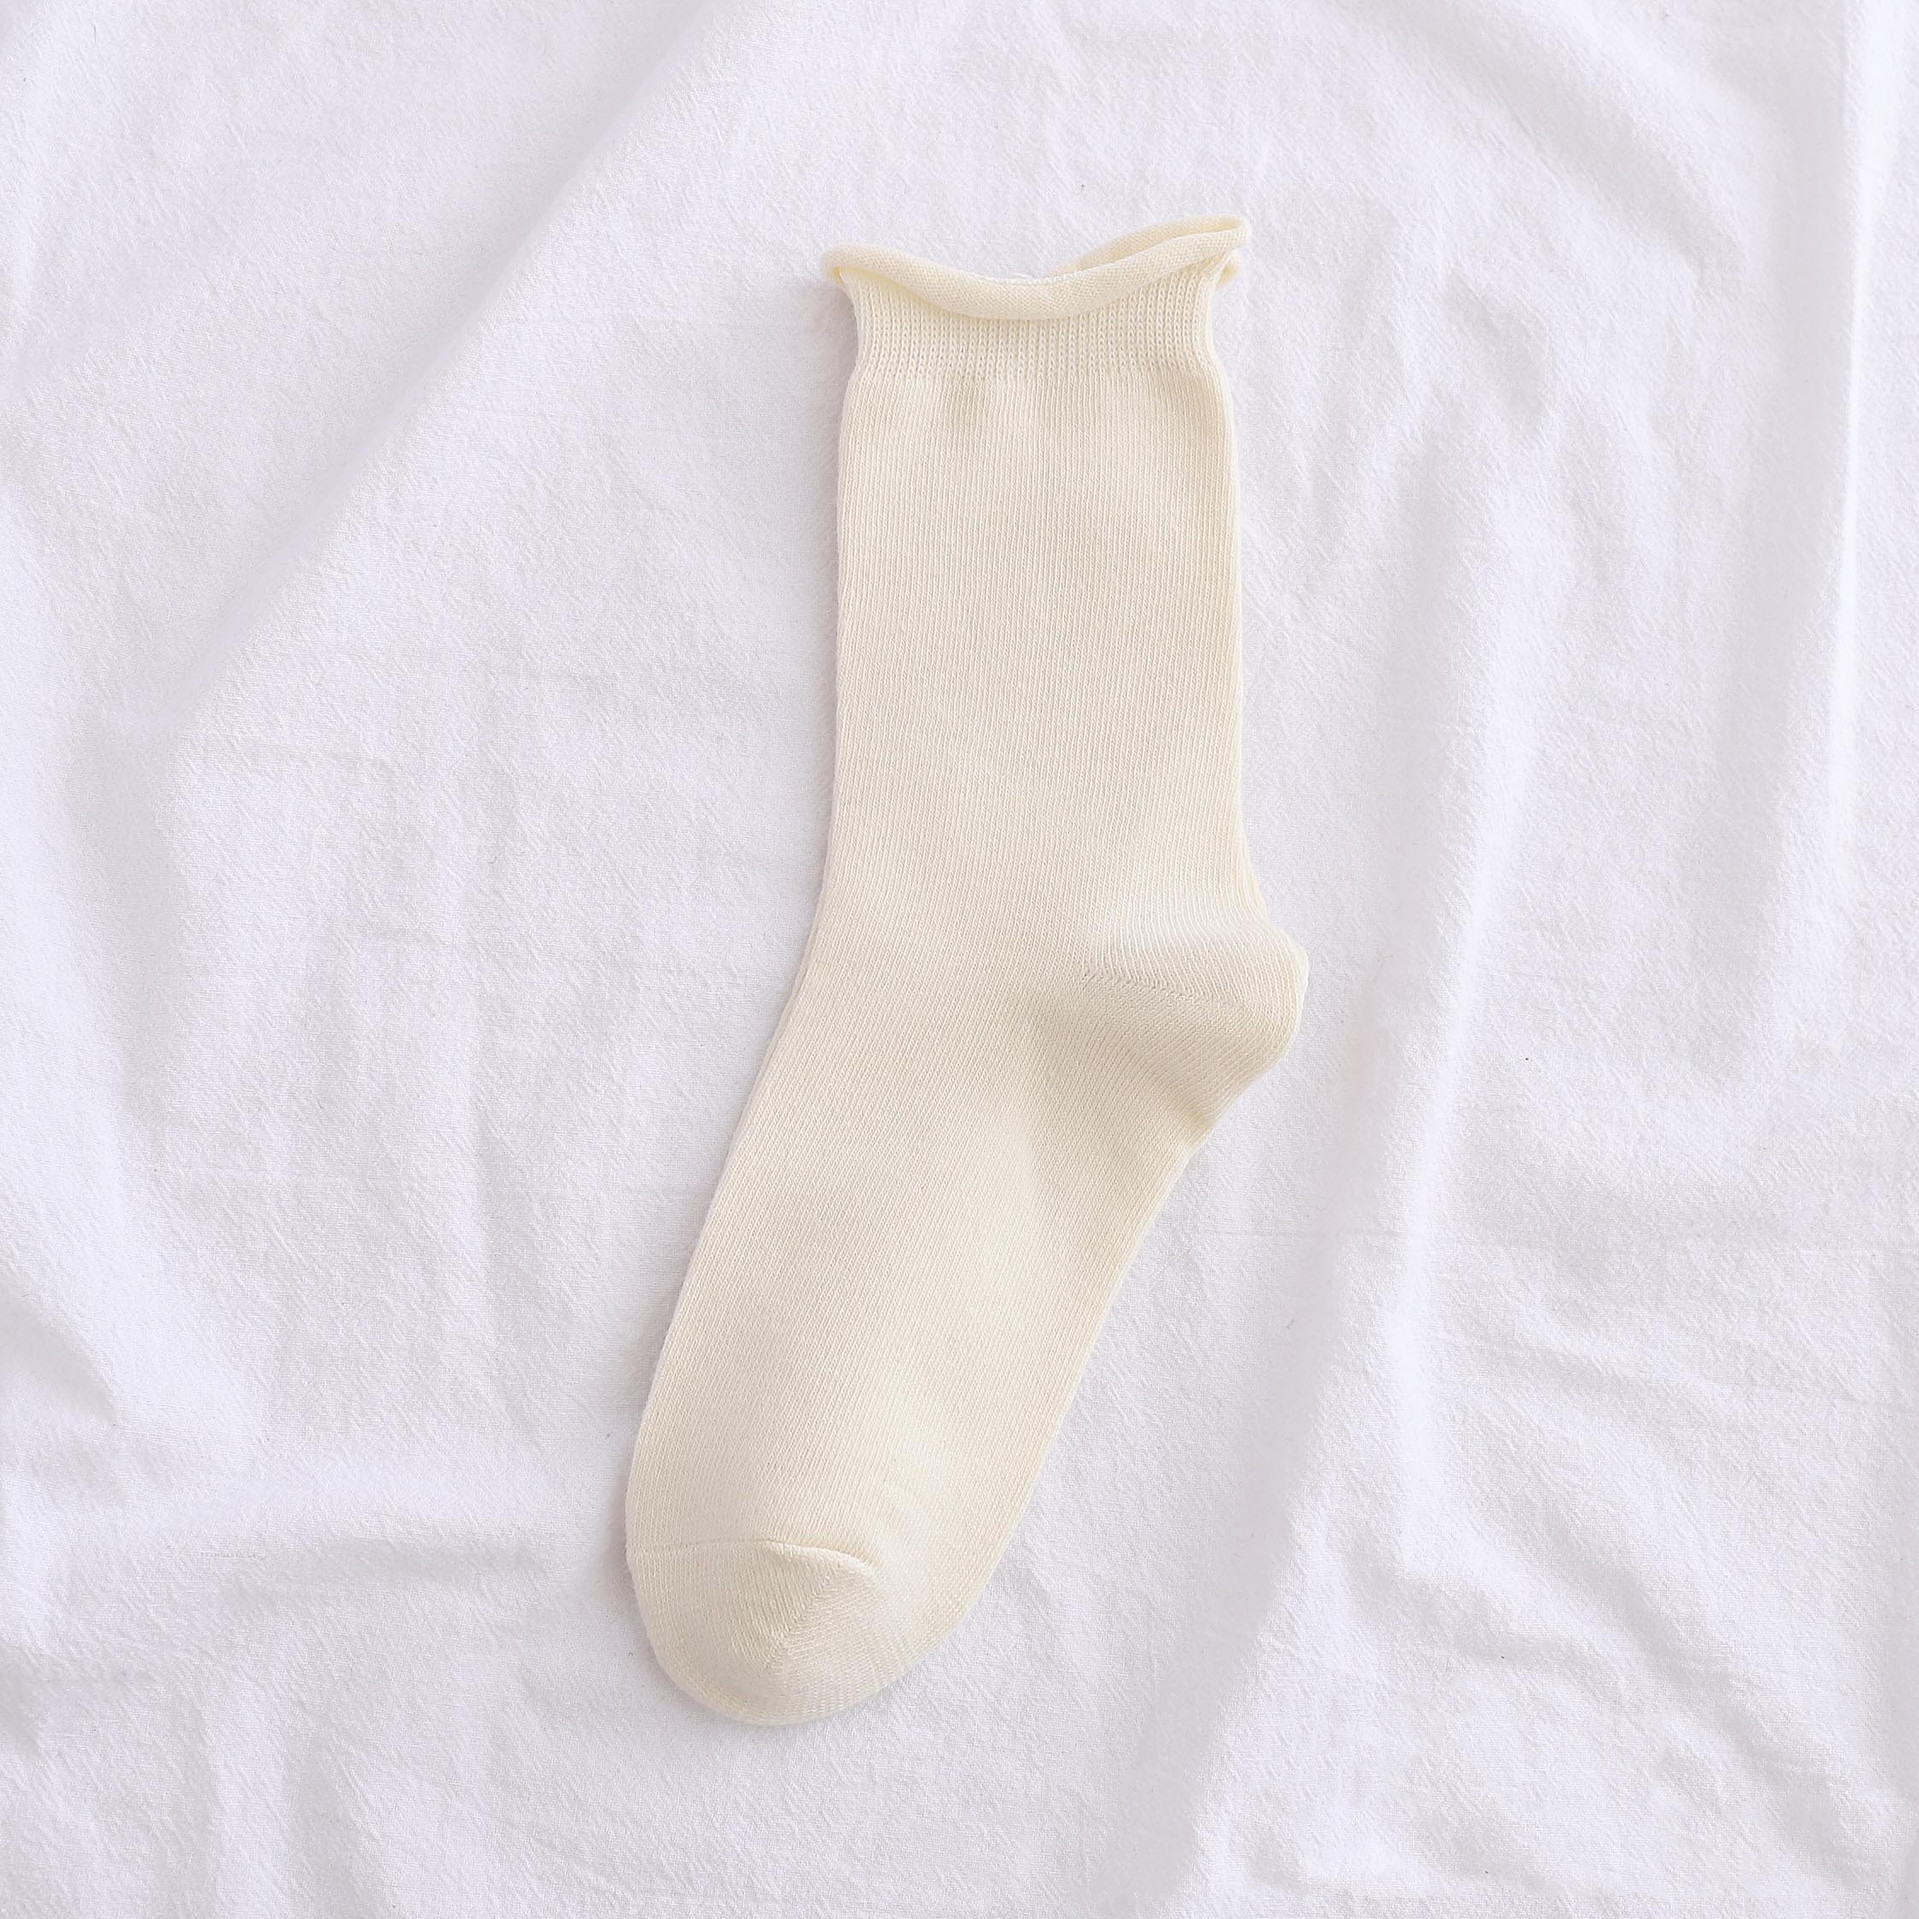 3bc87379 fff0 4e41 a6a5 a41758840429 - Comfy women's cotton socks